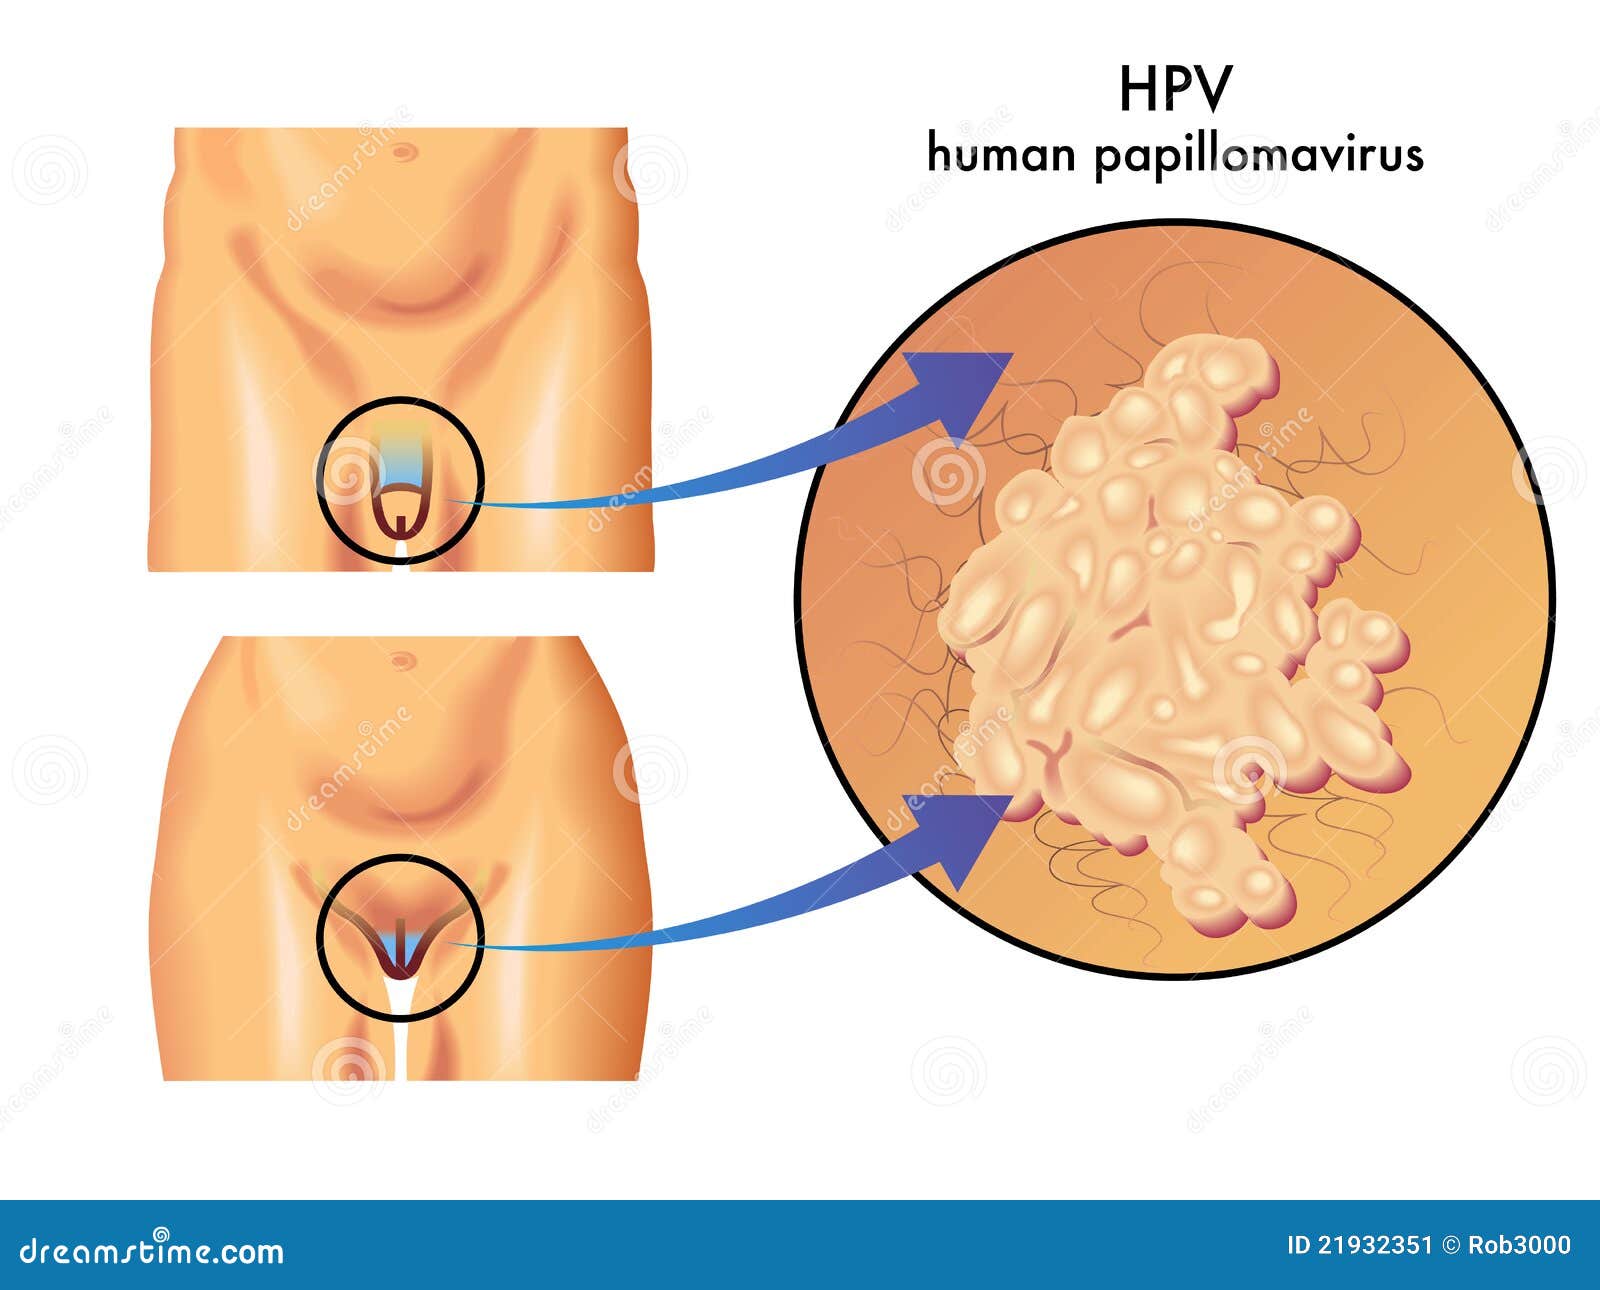 Papillomavirus humain symptomes